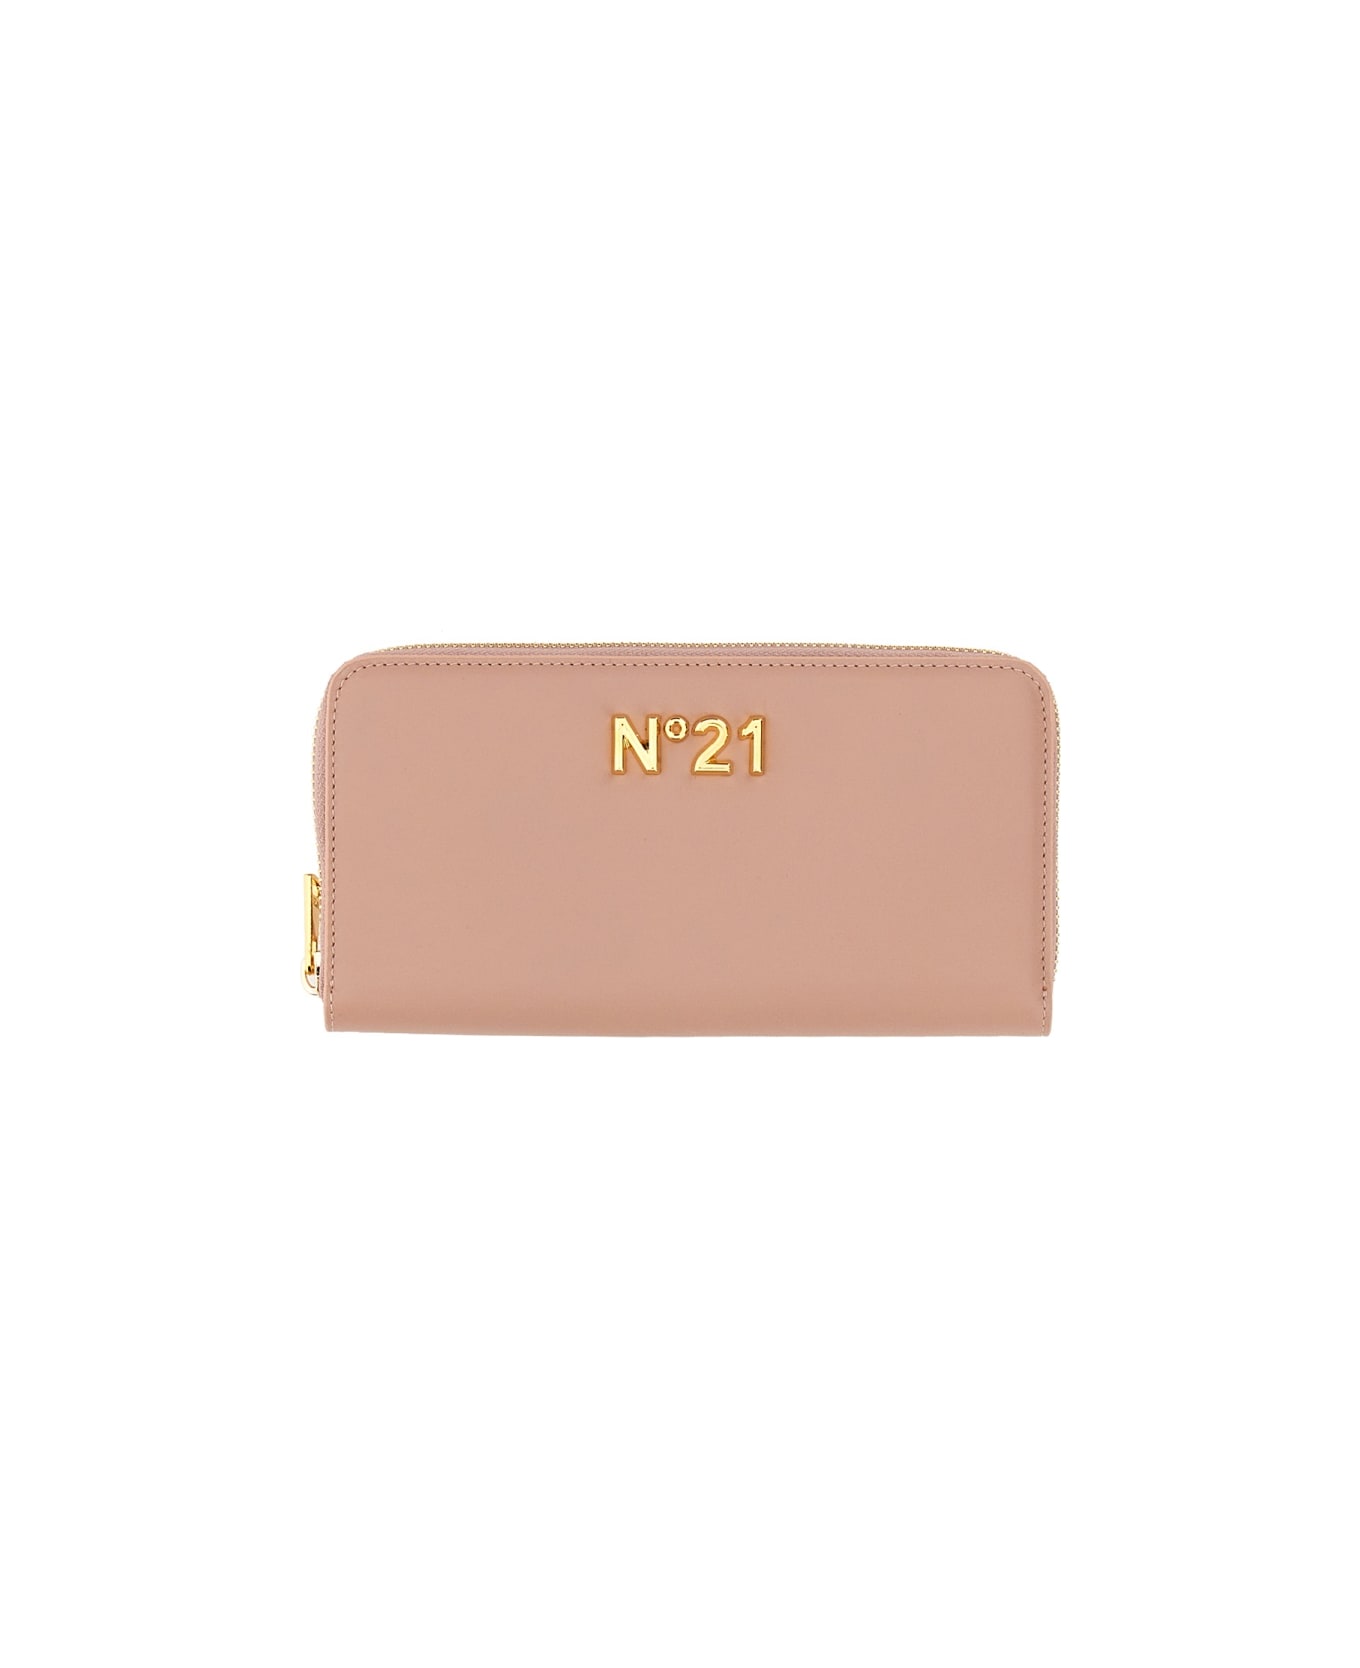 N.21 Leather Wallet - POWDER